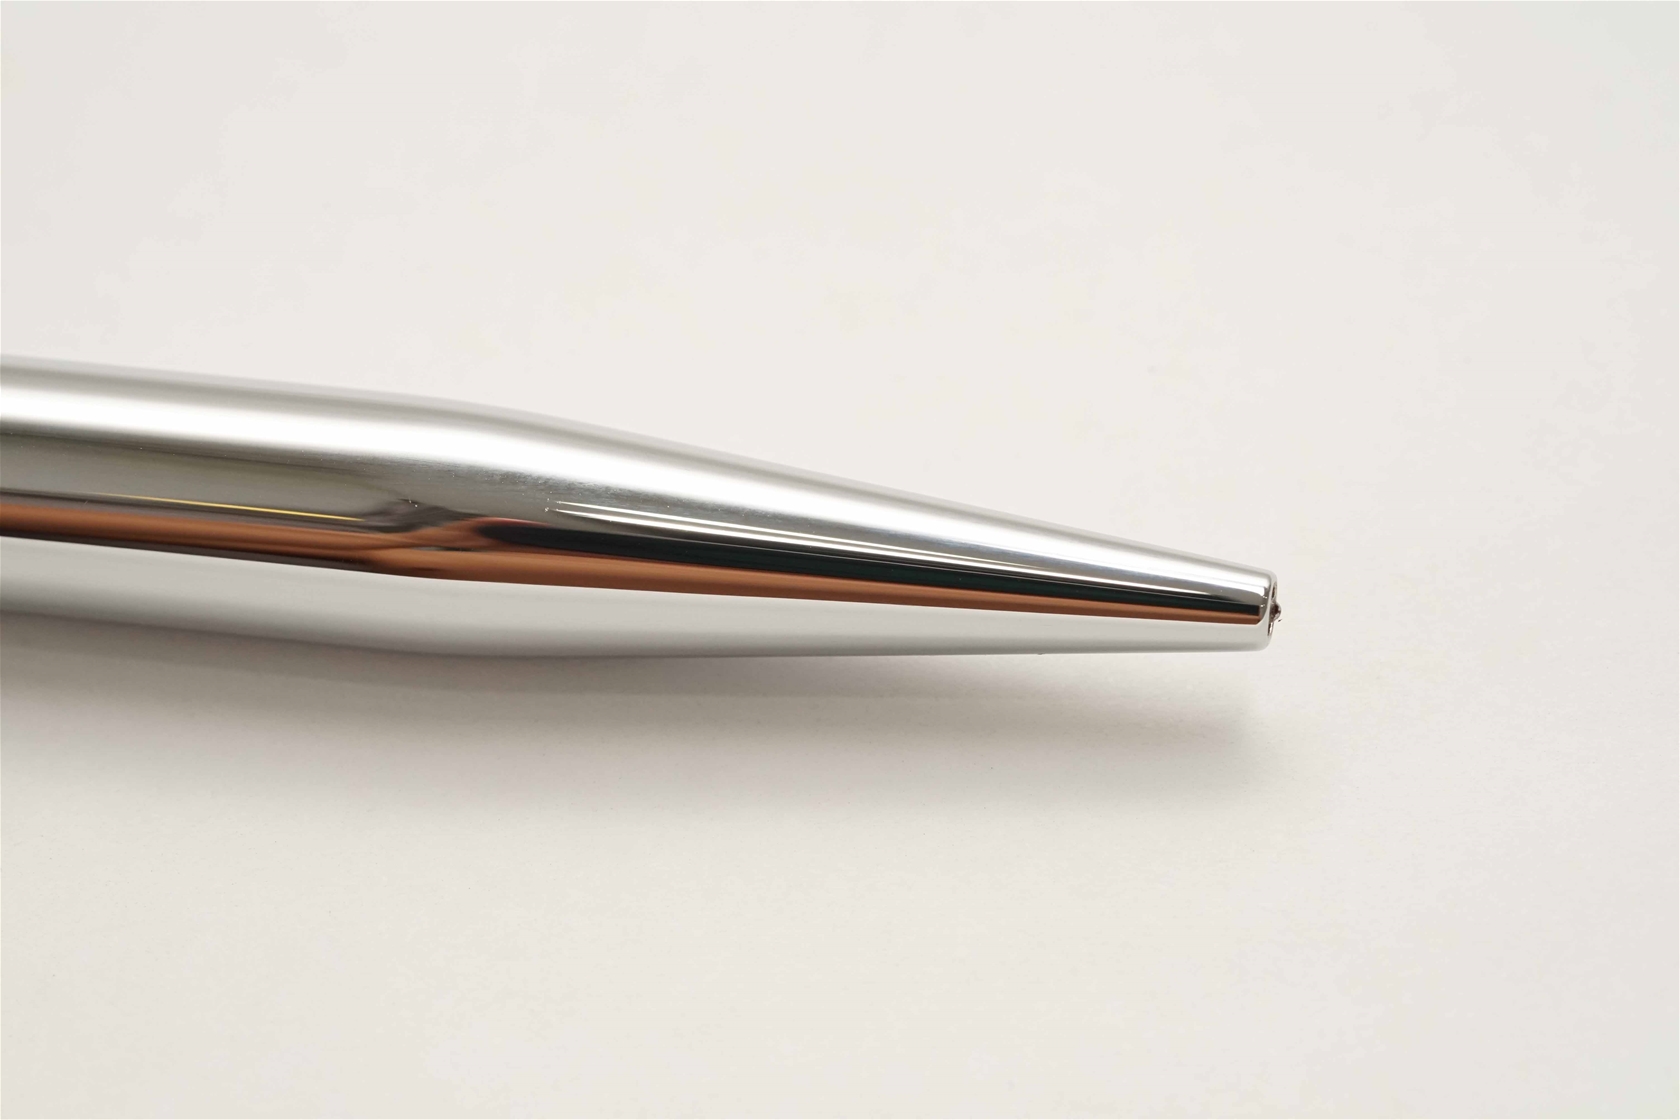 Bút bi Cross Tech2 Pure Chrome With Stylus Ballpoint Pen